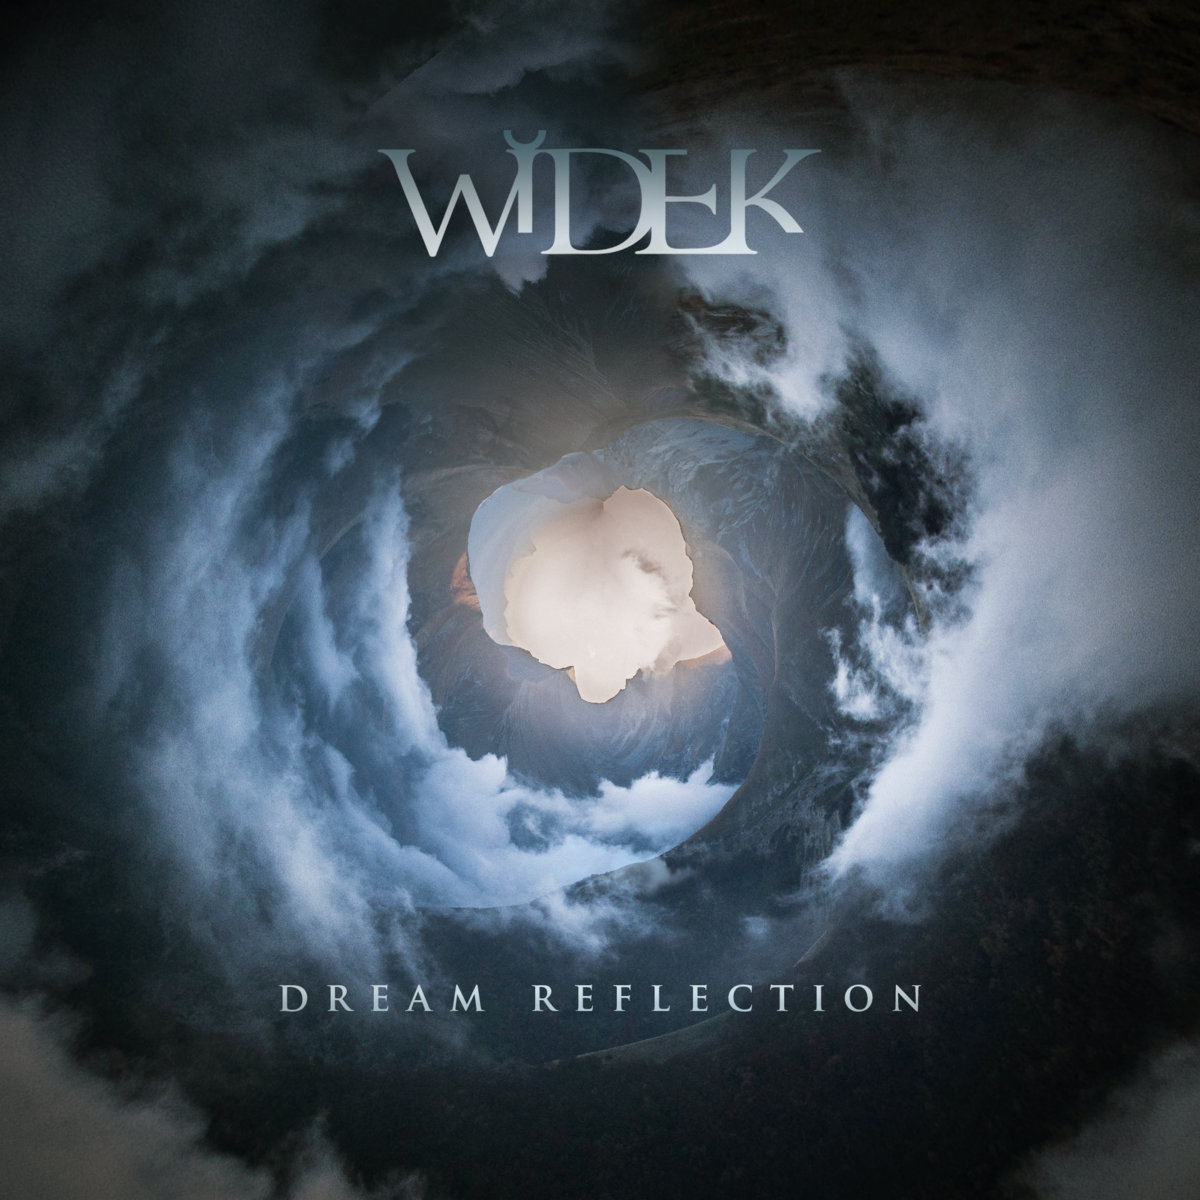 WIDEK - Dream Reflection cover 